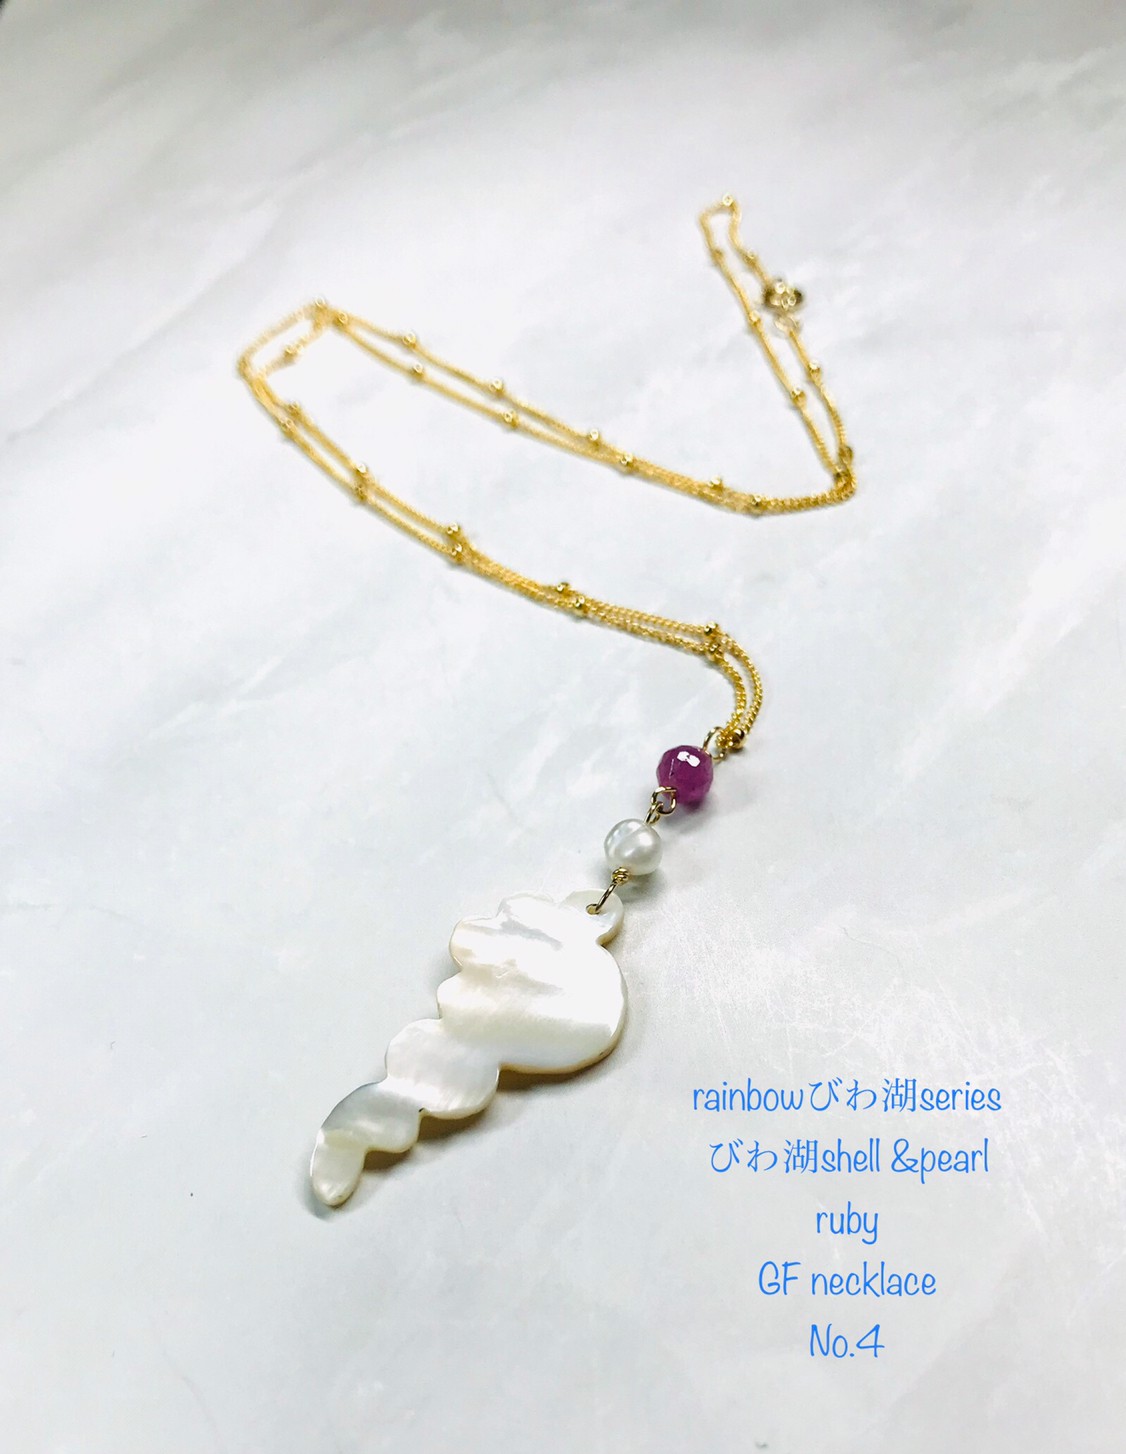 rainbowびわ湖series《びわ湖shell &pearl GF necklace No.4》